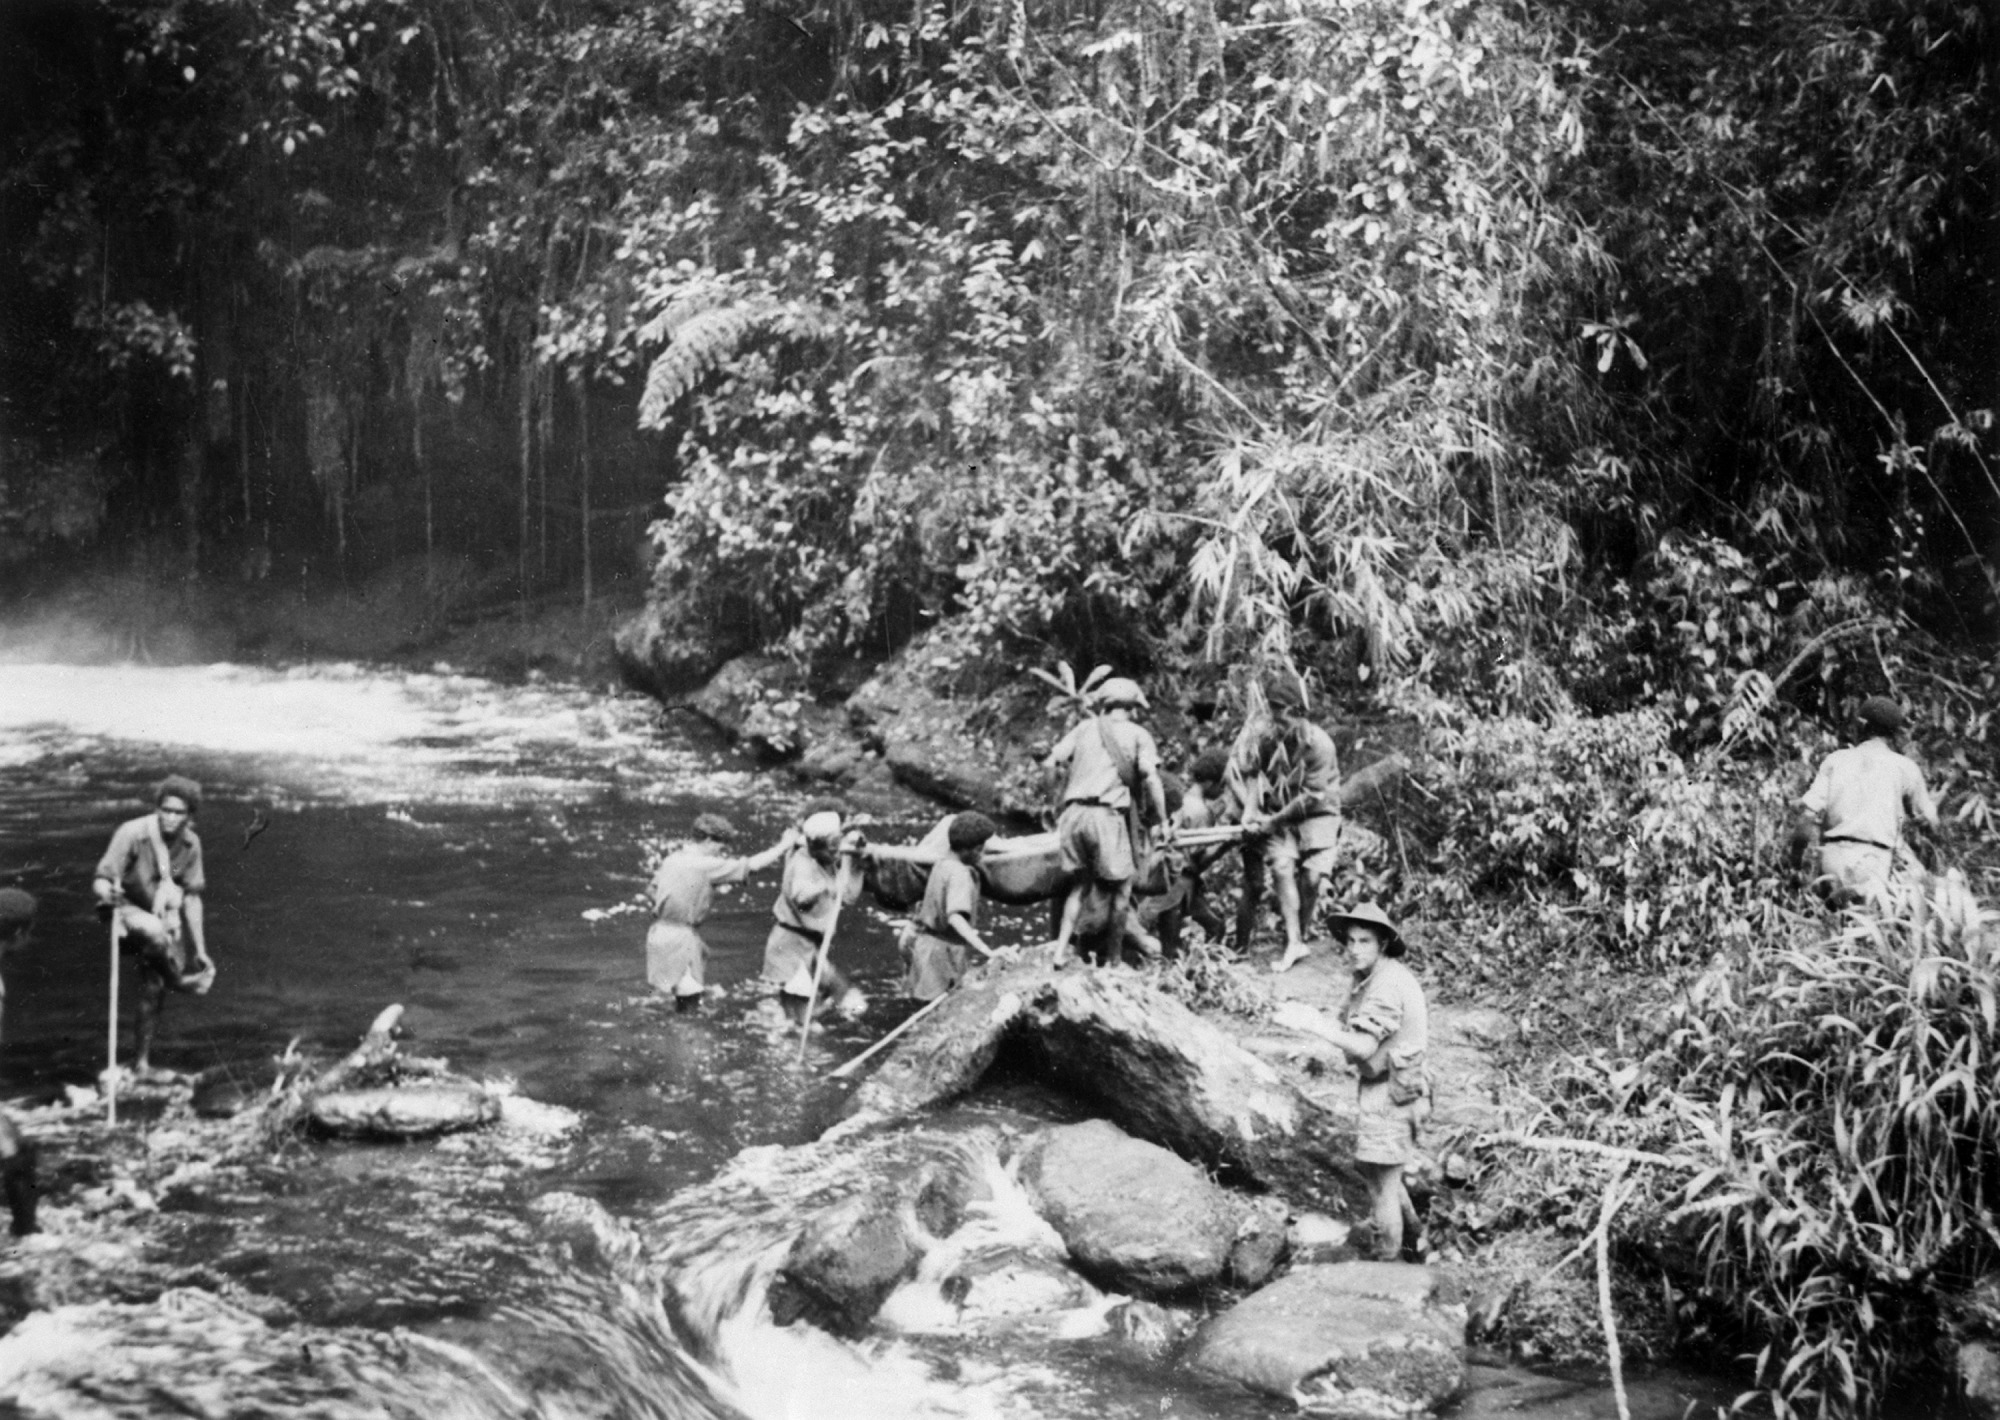 Papuan stretcher bearers carry an injured Australian soldier across a river on the Kokoda Trail, 1942.